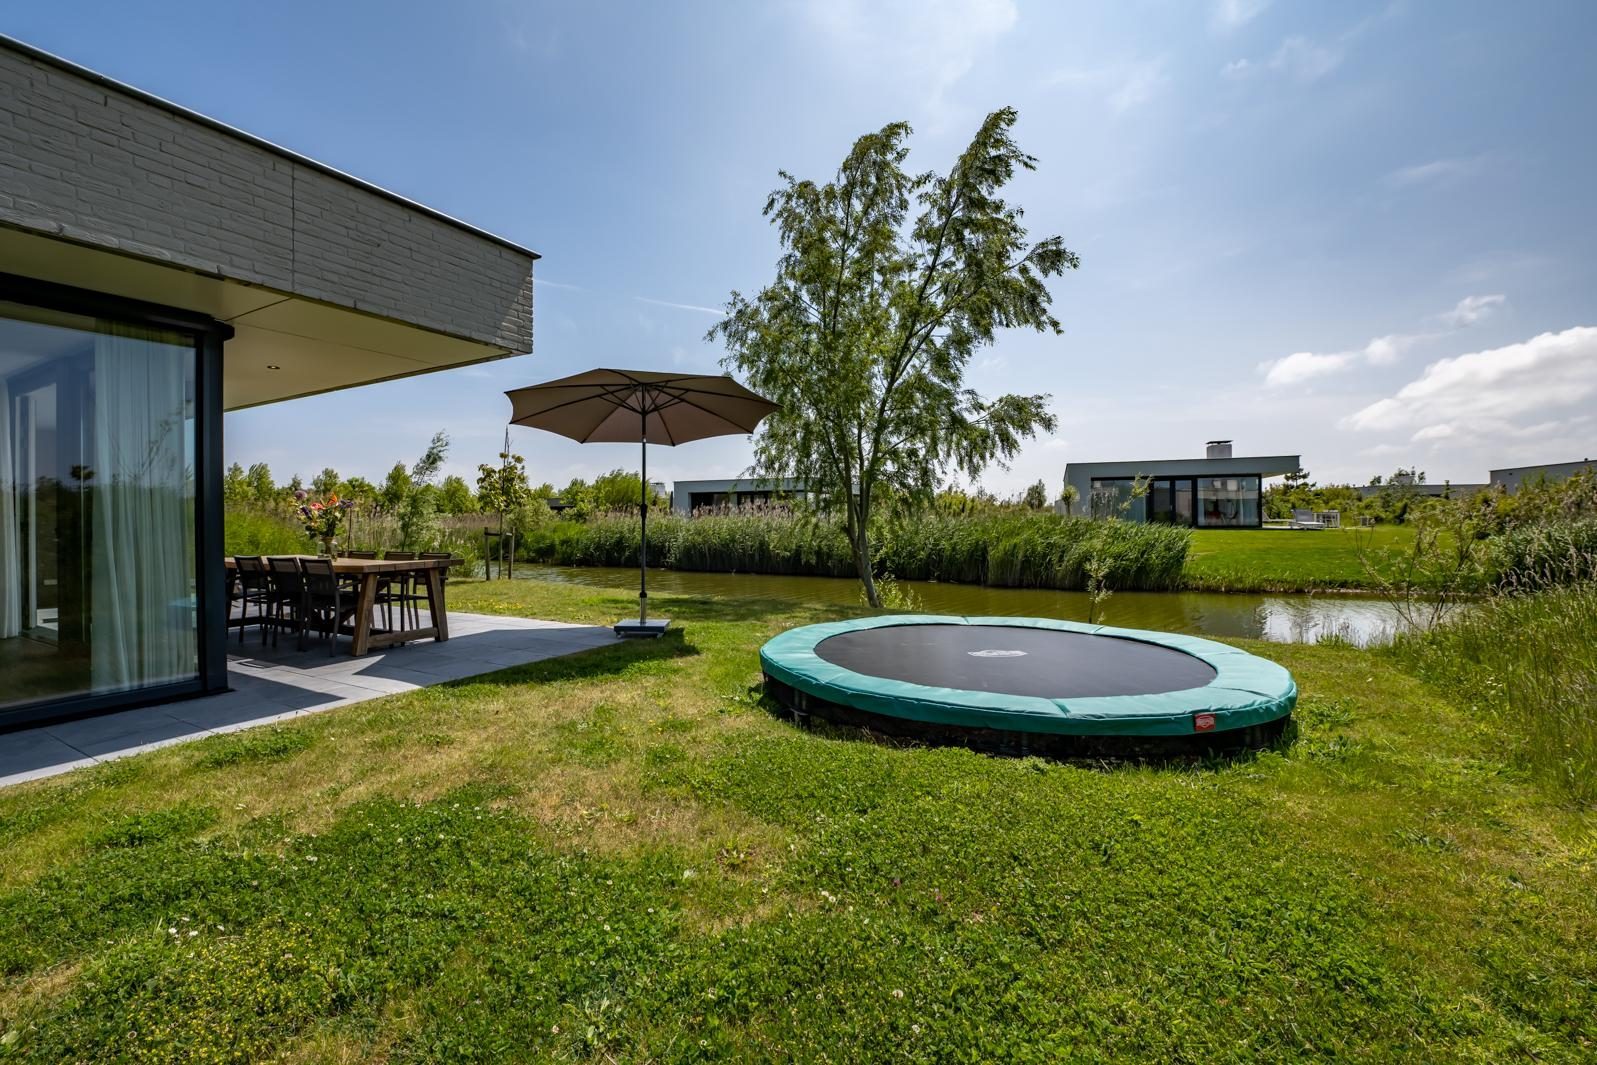 Luxury villa with trampoline near the water